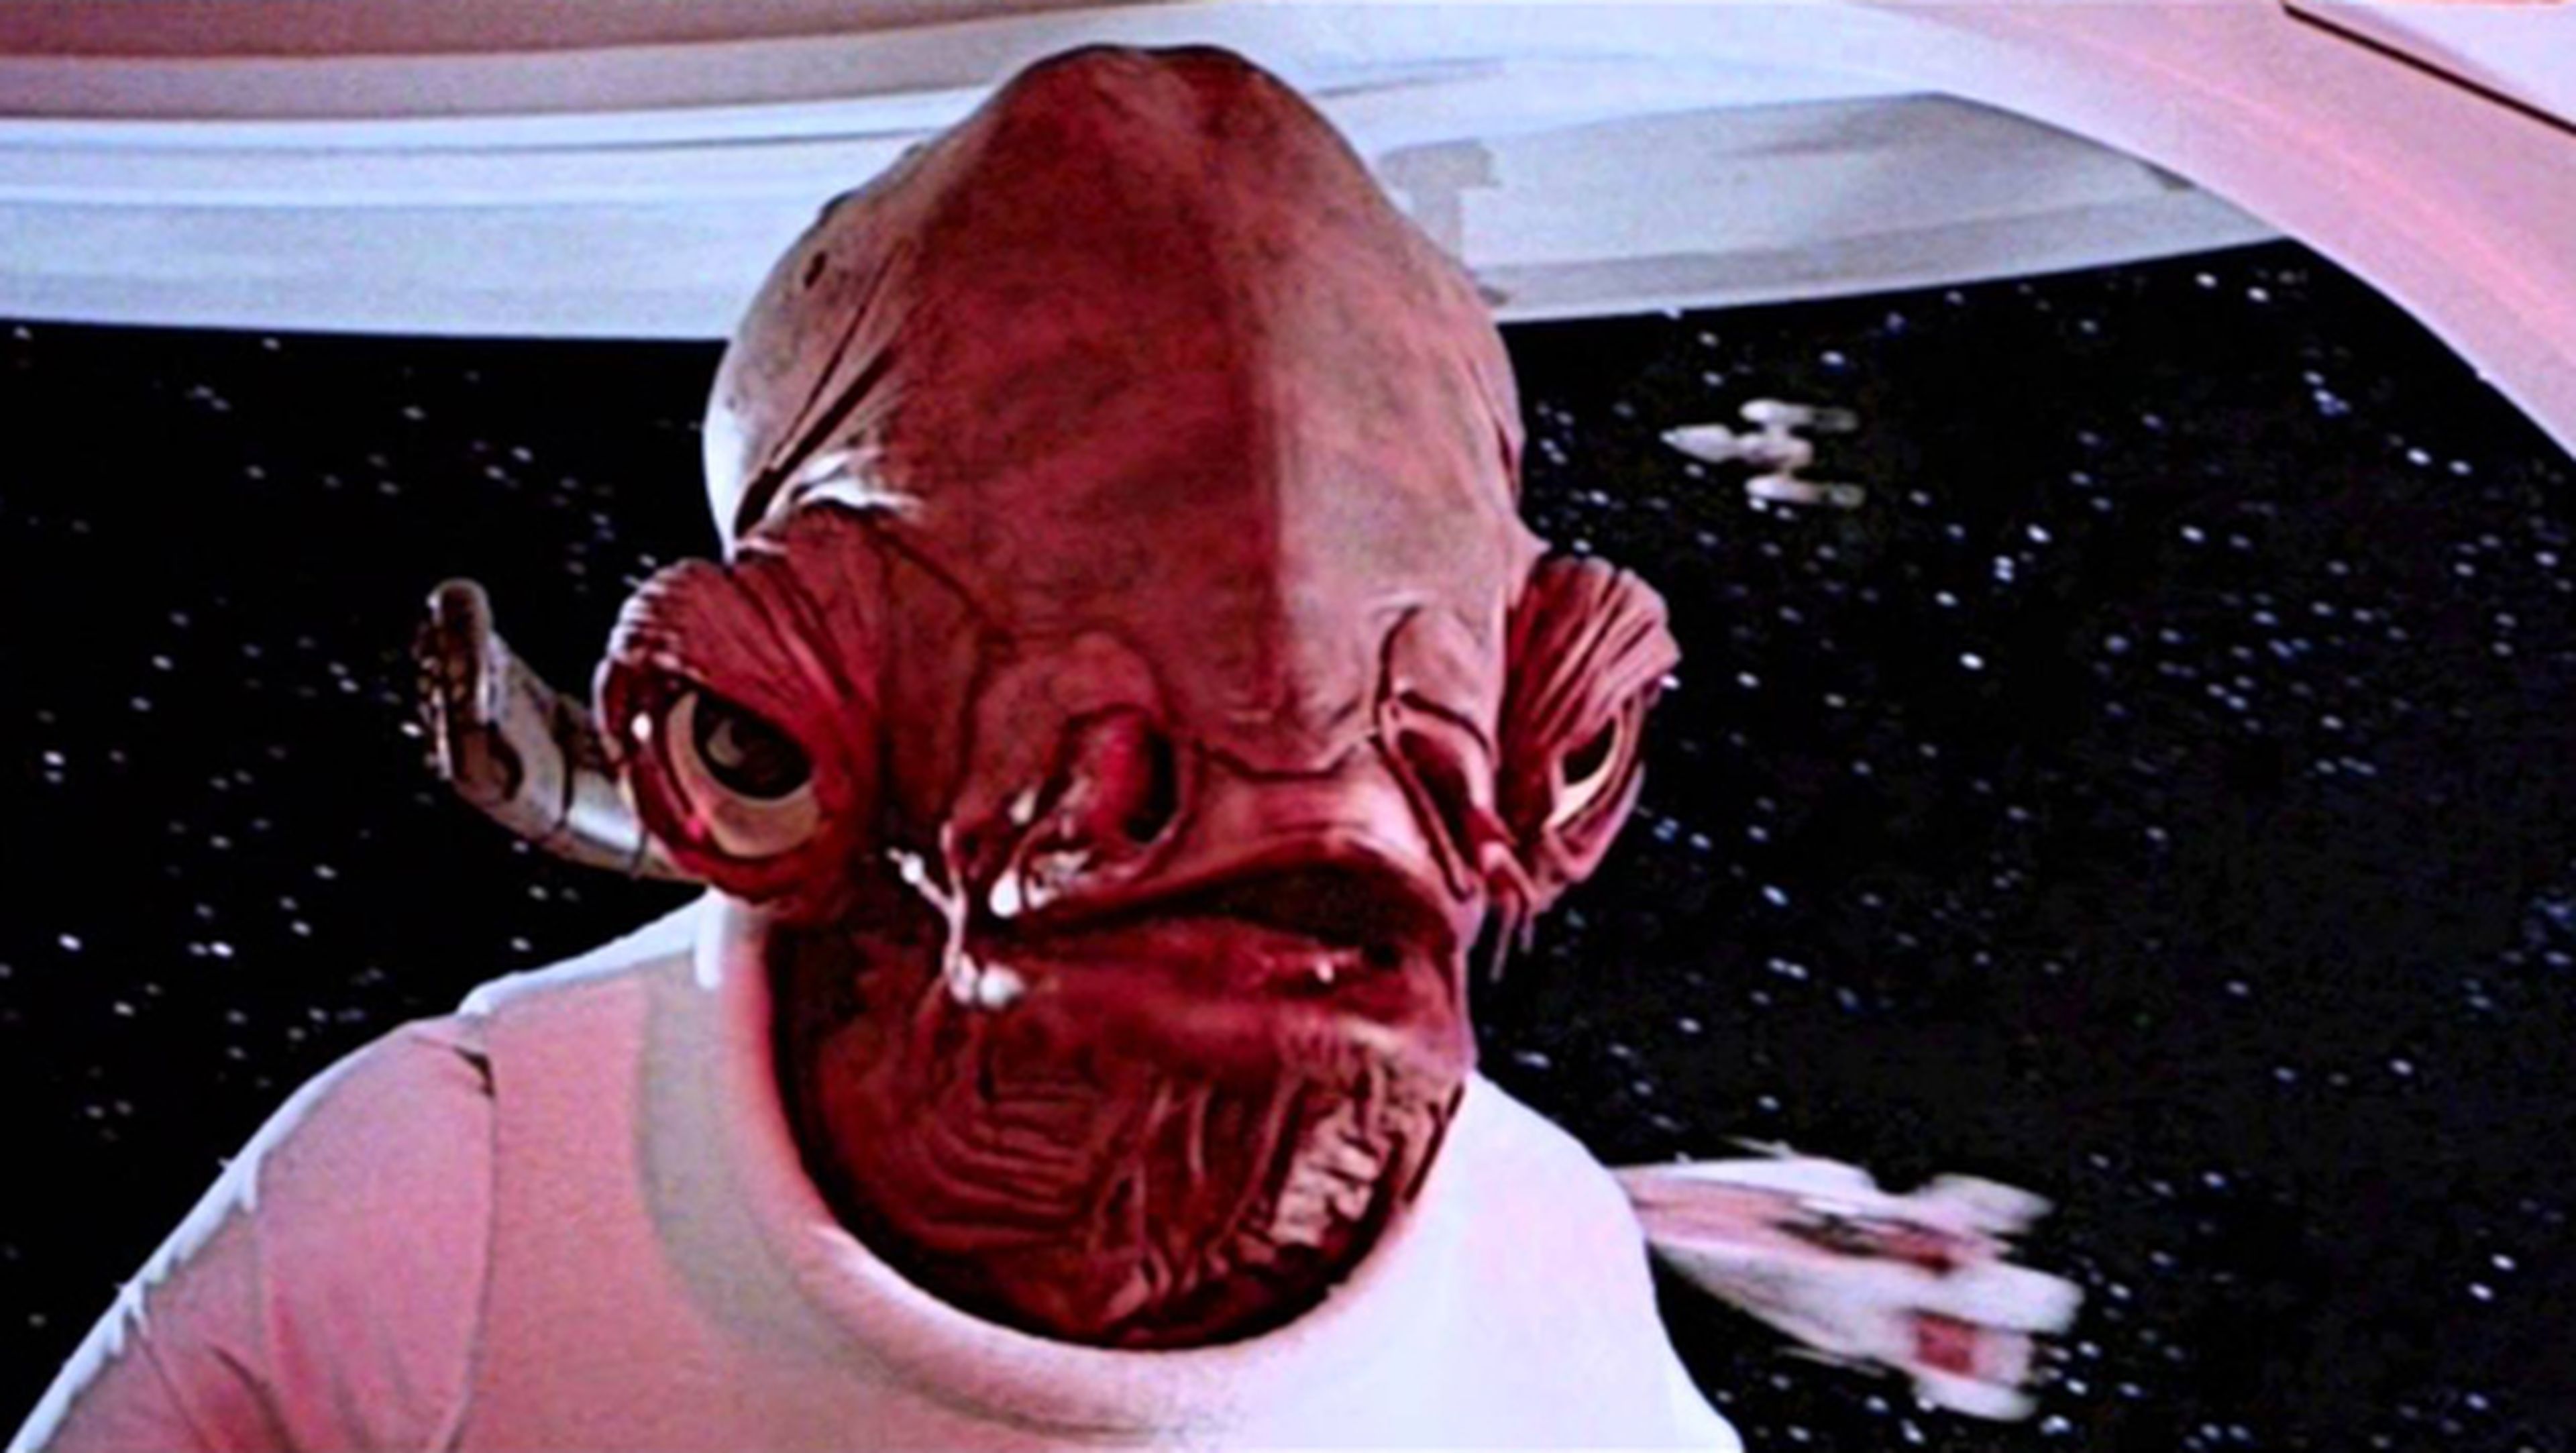 “It’s a trap!” Muere el actor dobló al Almirante Ackbar en Star Wars